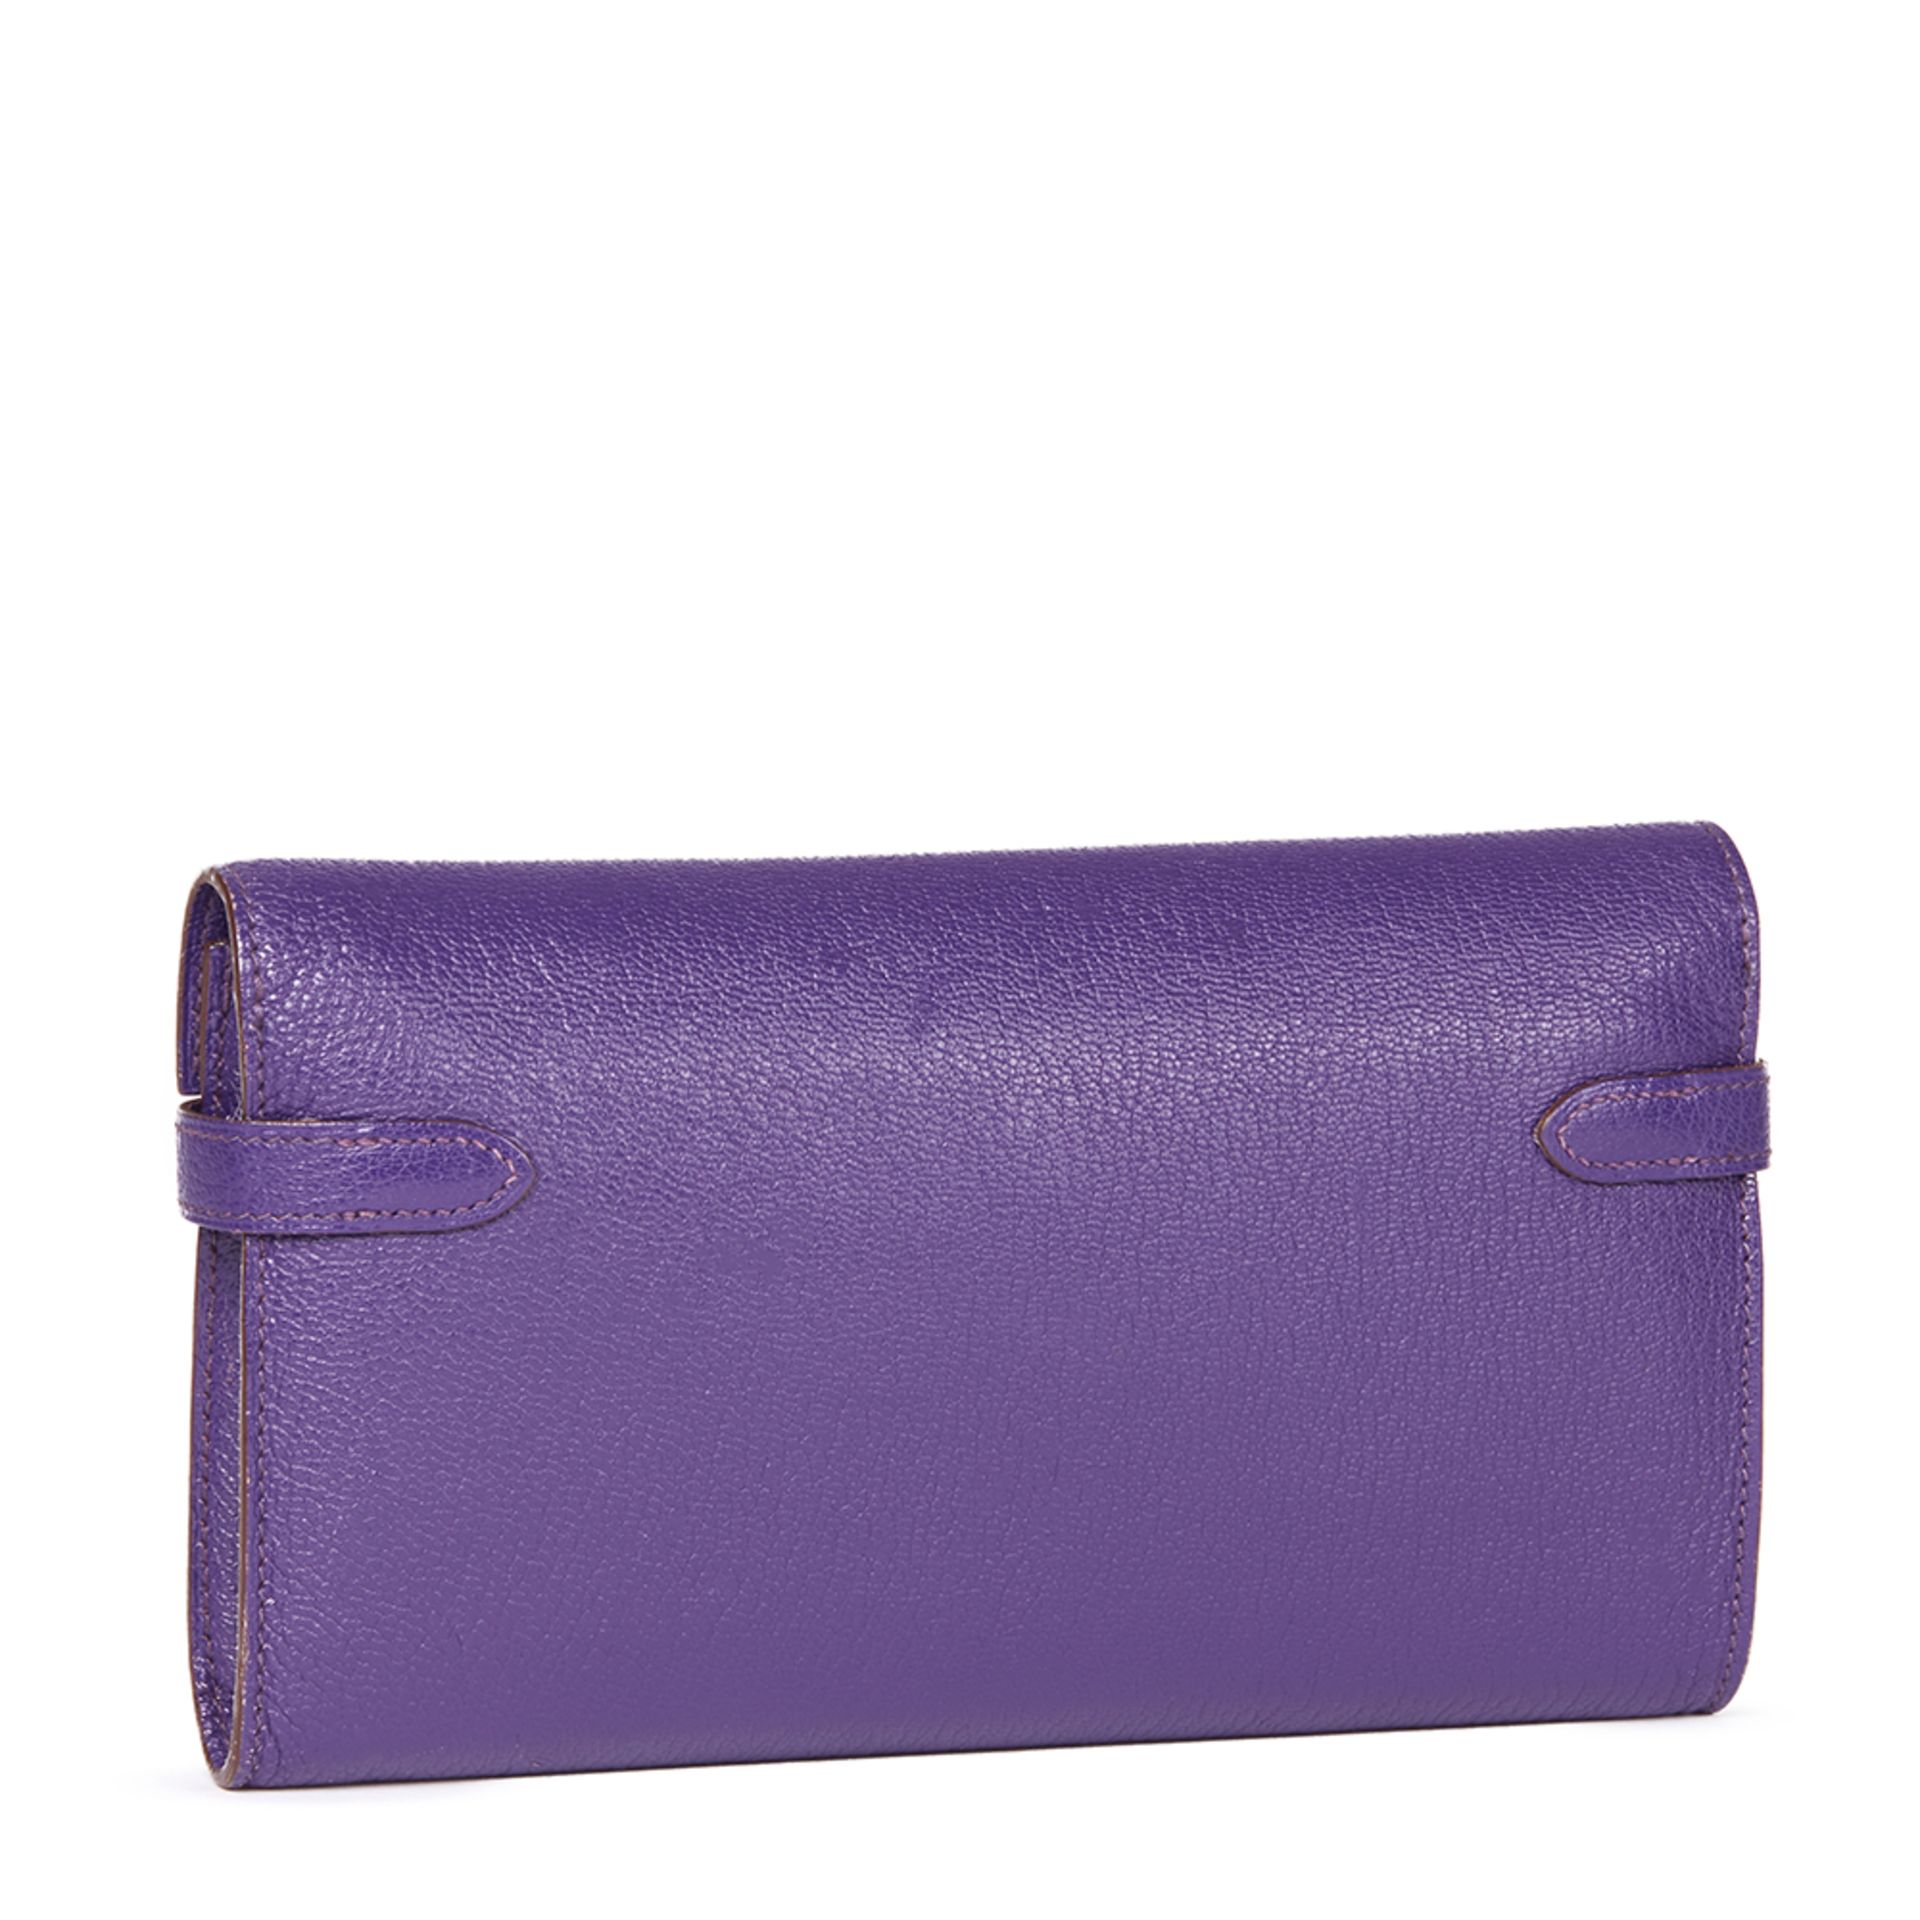 Hermès Violet Chevre Mysore Leather Kelly Long Wallet - Image 5 of 10